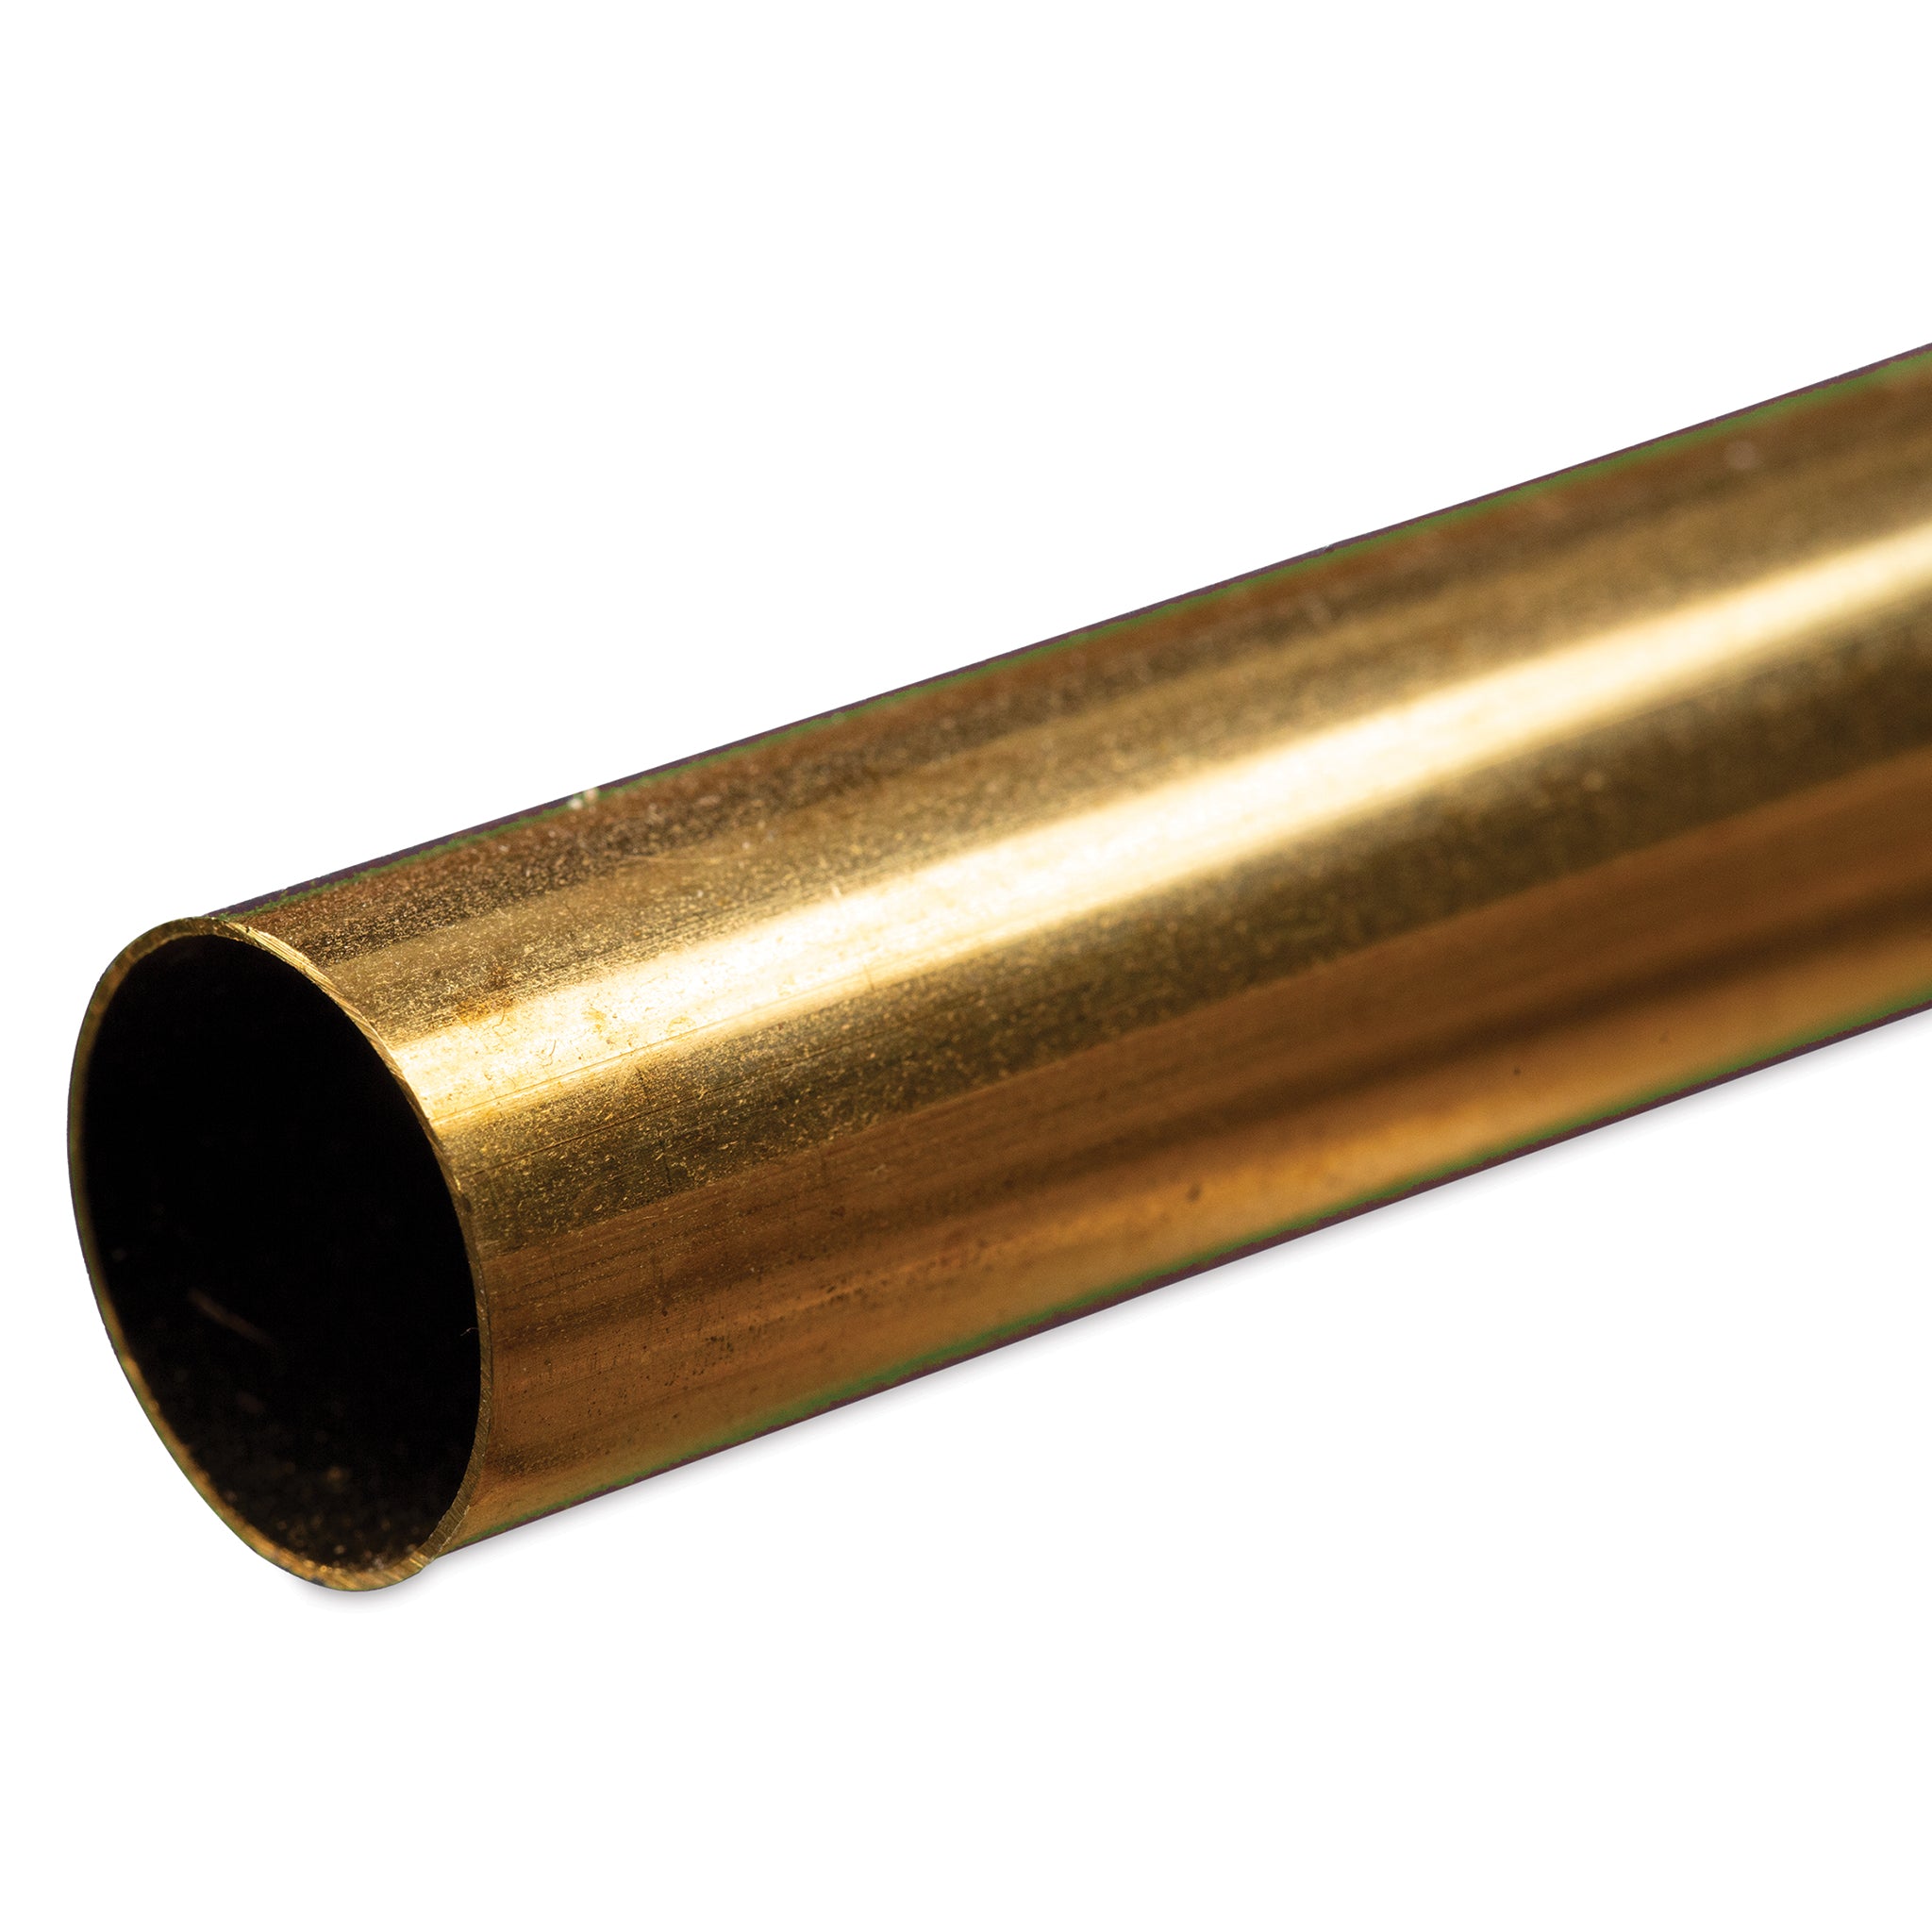 K&S Metals 8135 Round Brass Tube 3/8" OD x 0.014" Wall x 12" Long (1 Piece)